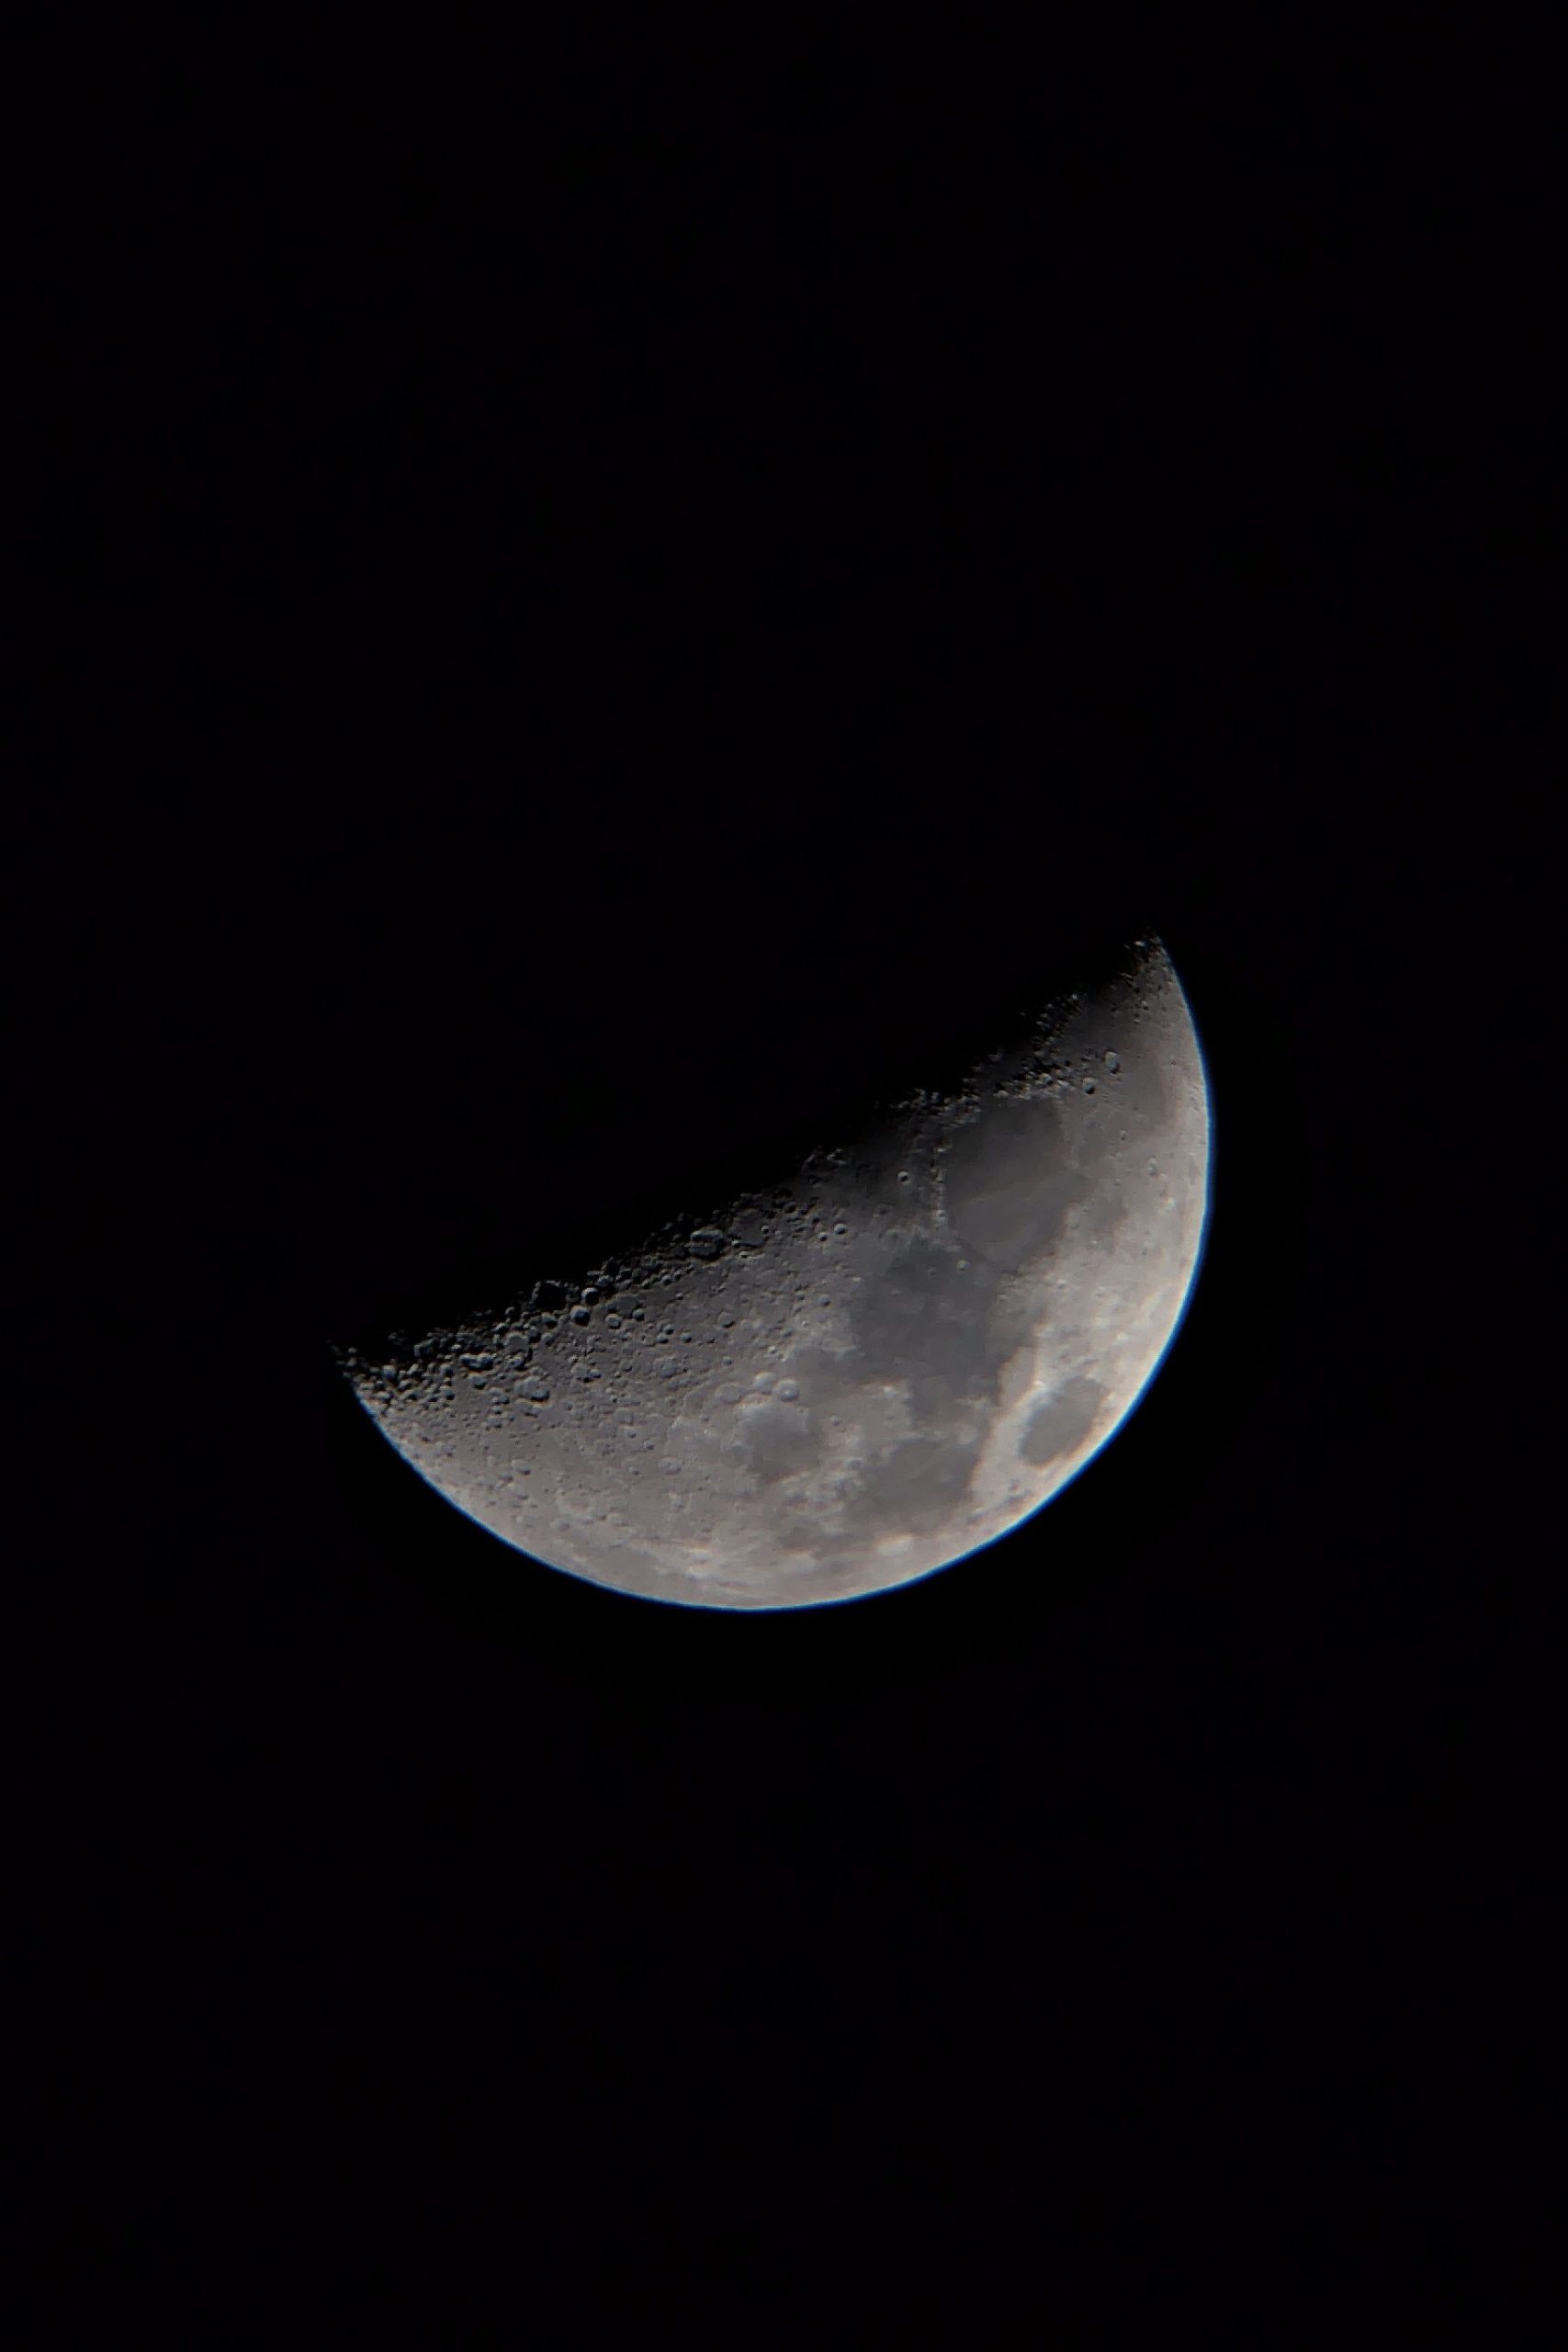 Vernal Equinox Moon, Spring 2021, via iPhone